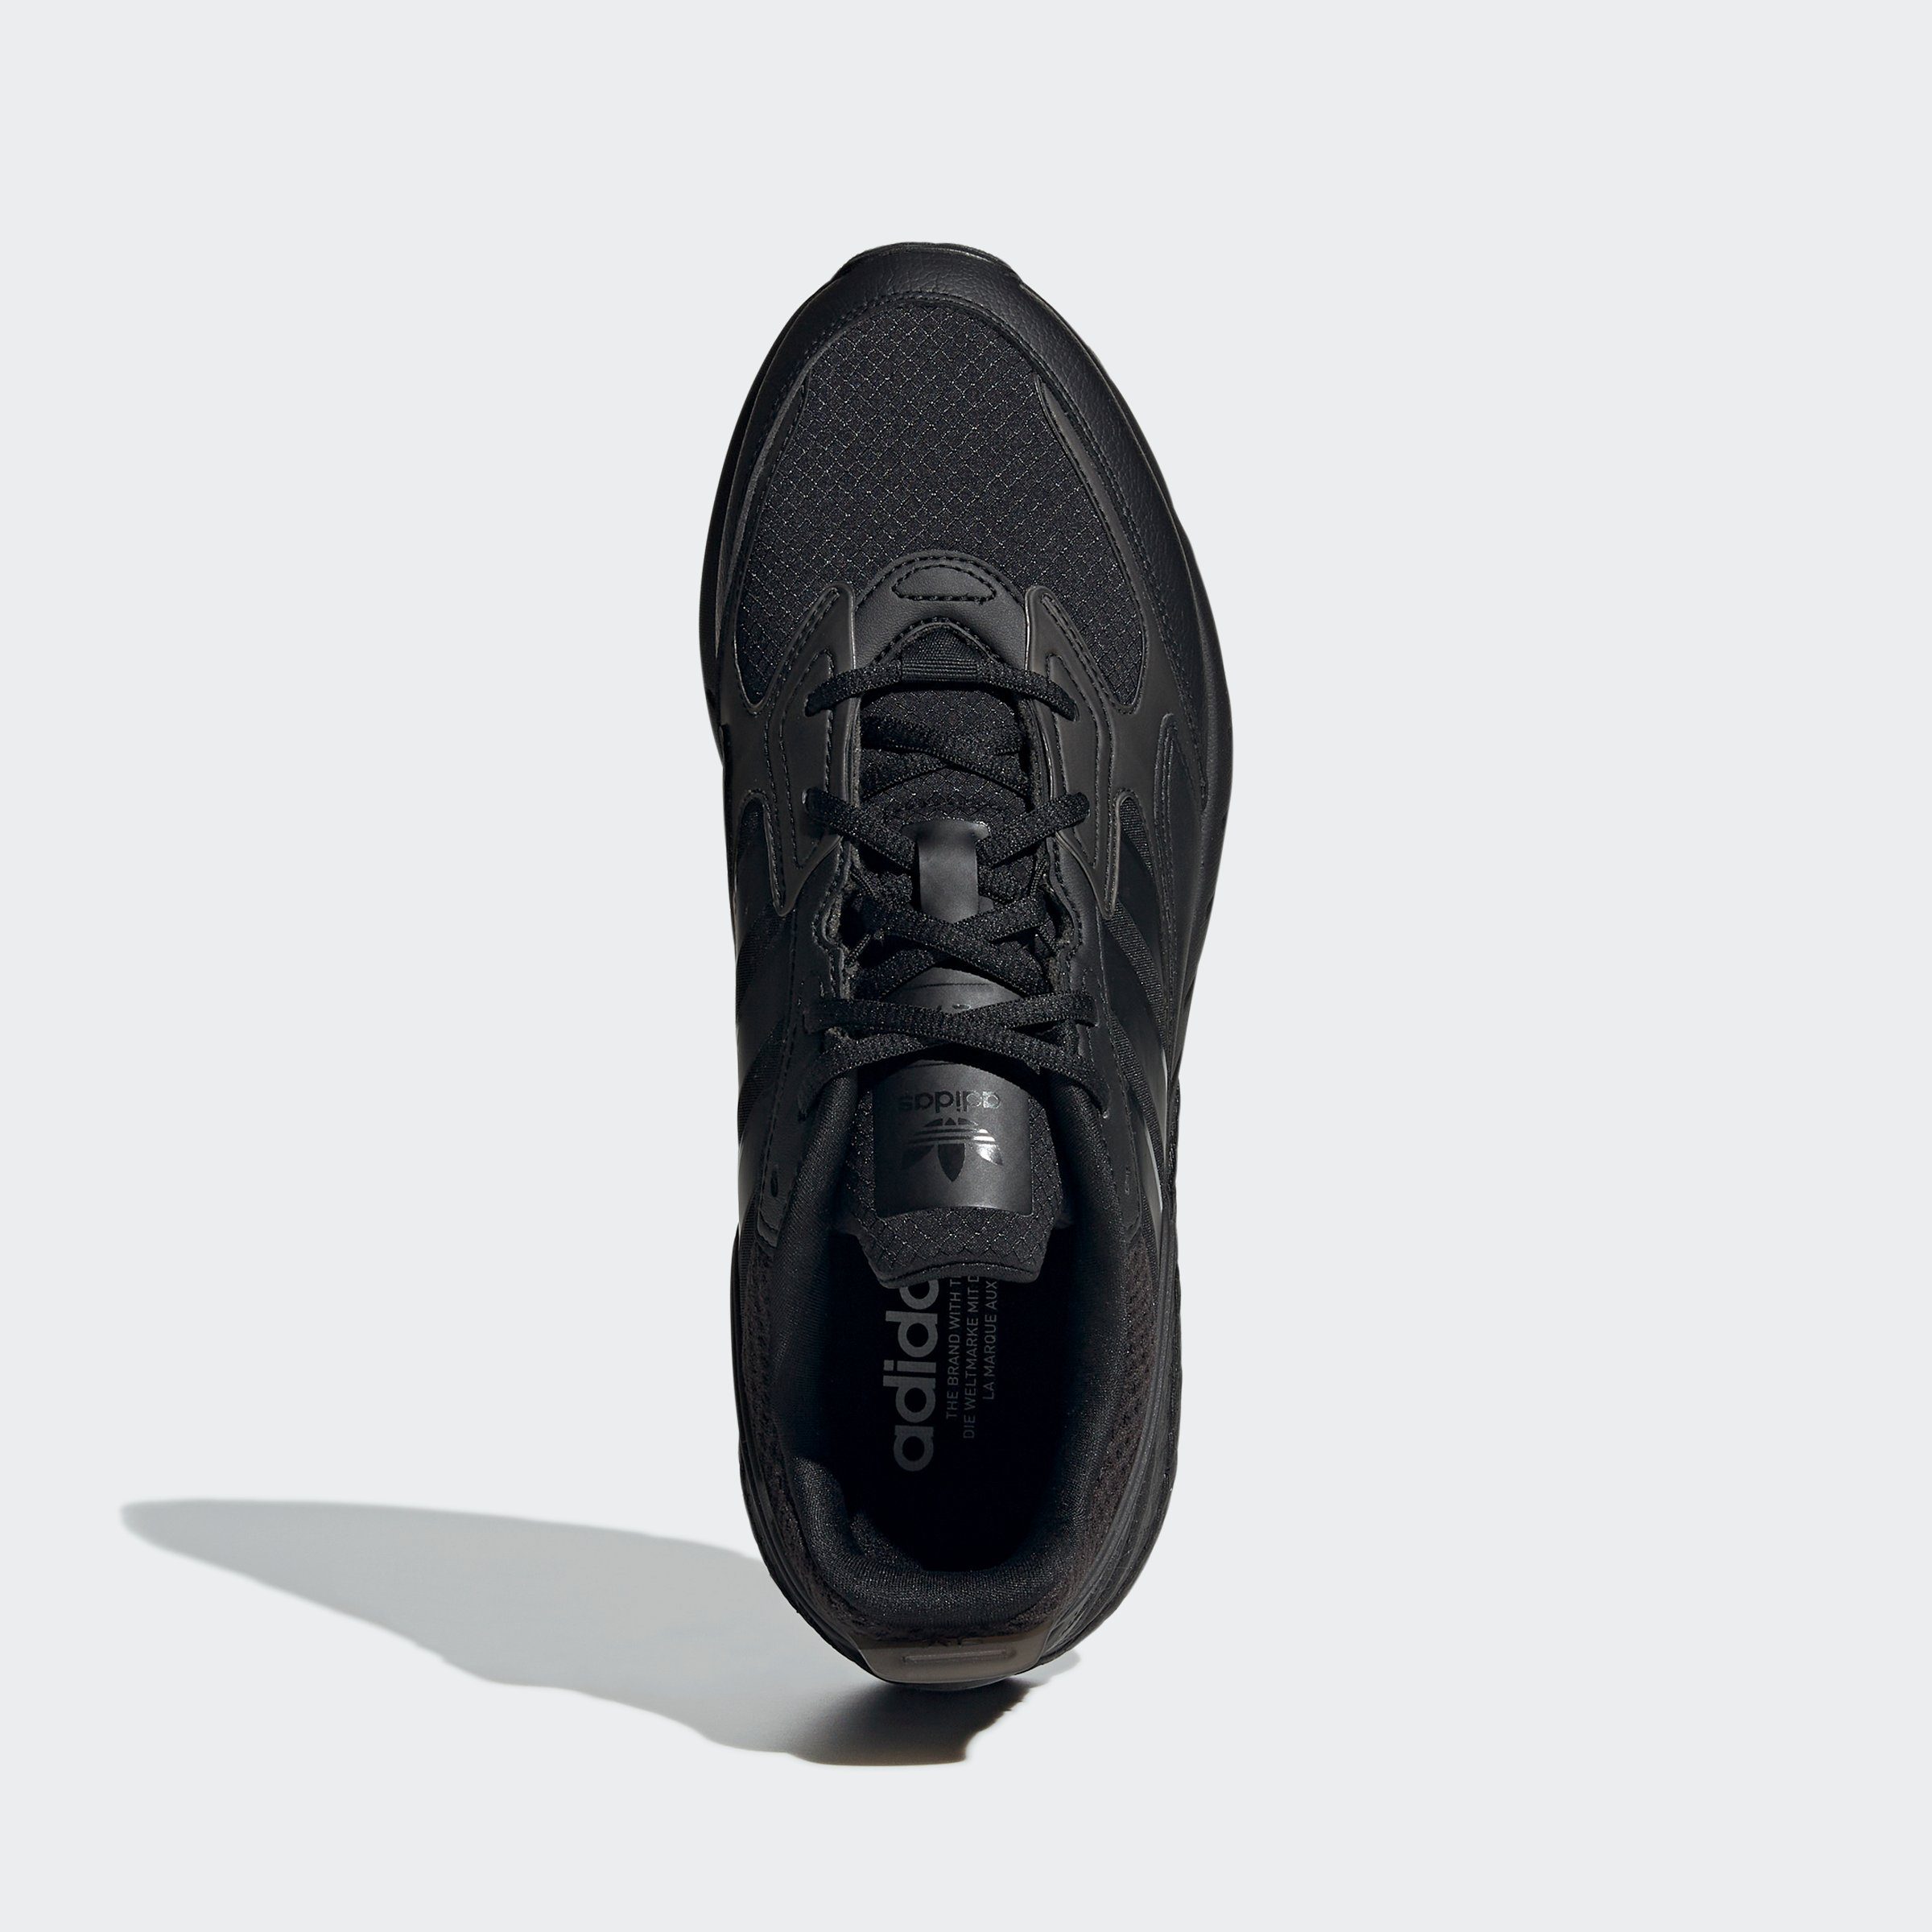 Originals 2.0 Sneaker Boost Originals Sneaker 1K adidas ZX adidas